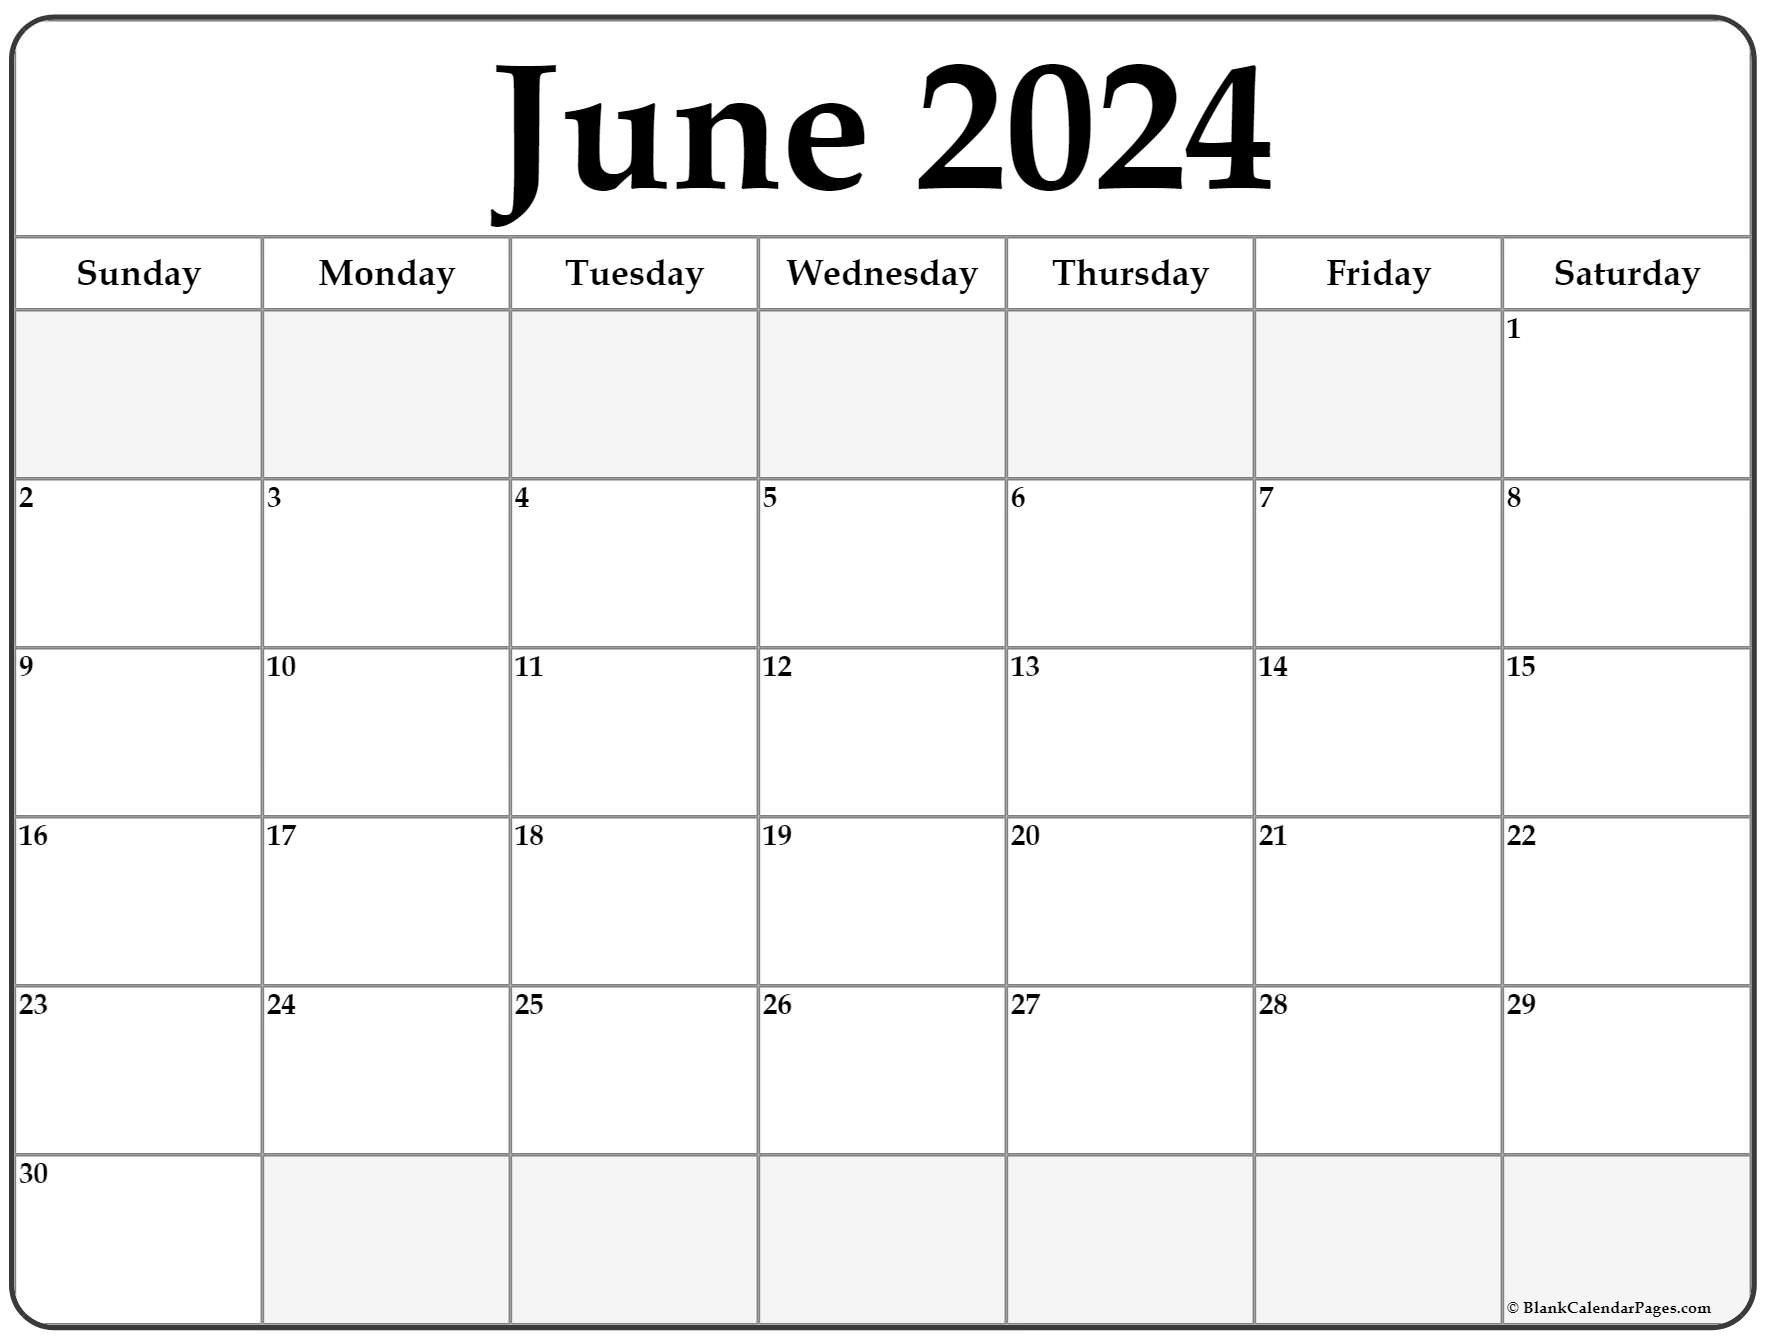 June 2024 Calendar | Free Printable Calendar for Free Printable Blank Calendar June 2024